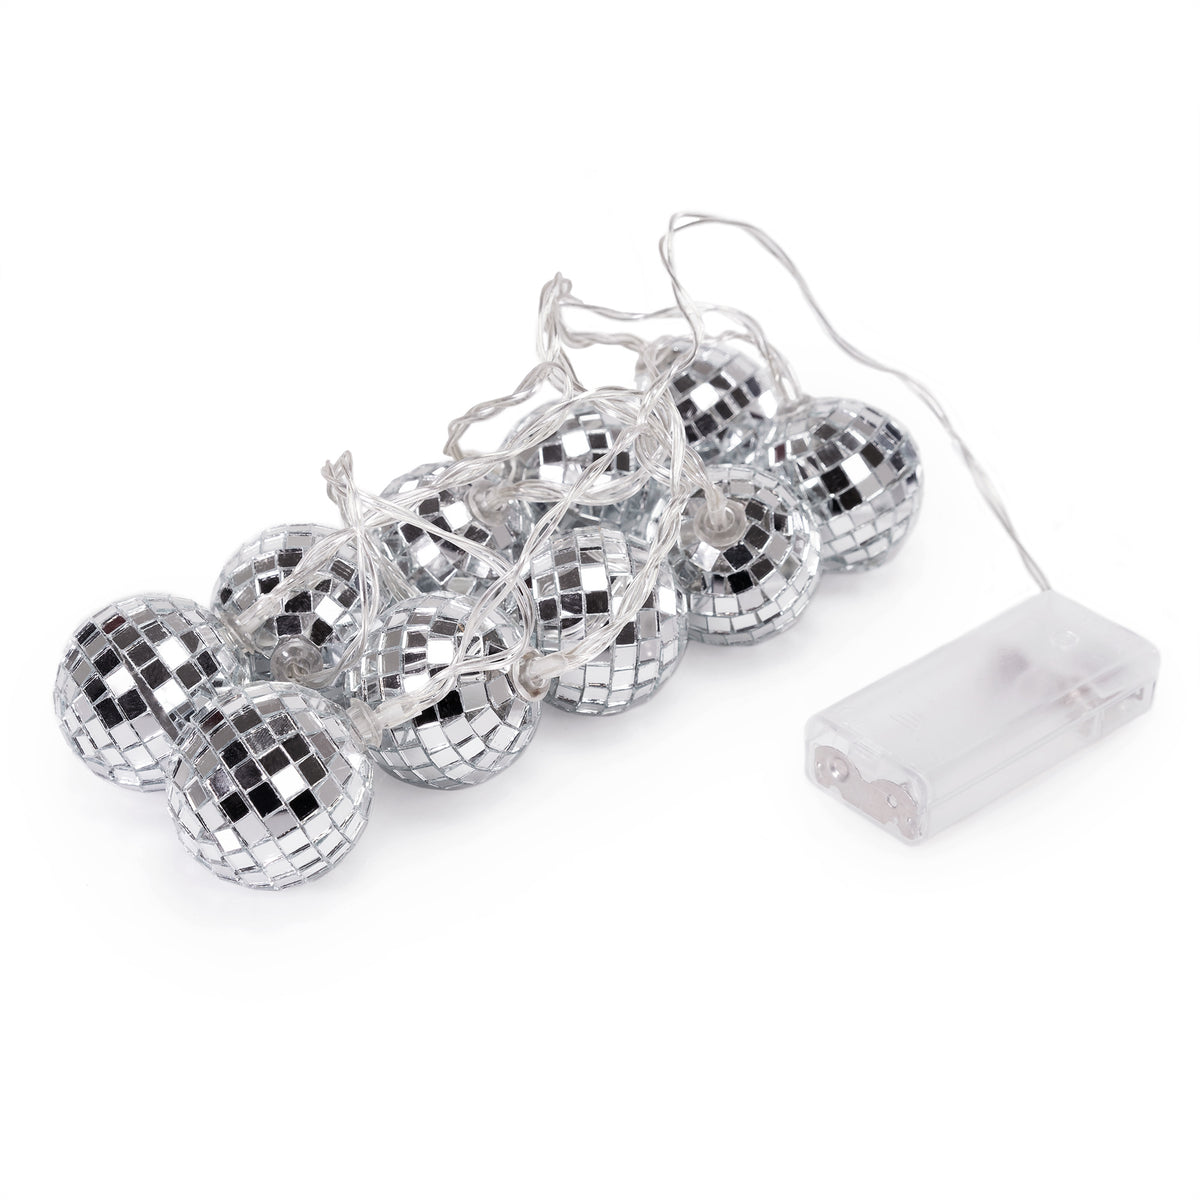 20 LED String Light Mirror Disco Balls Mixed Multi-Colors 10.5 feet Ba –  West Ivory LED Lighting